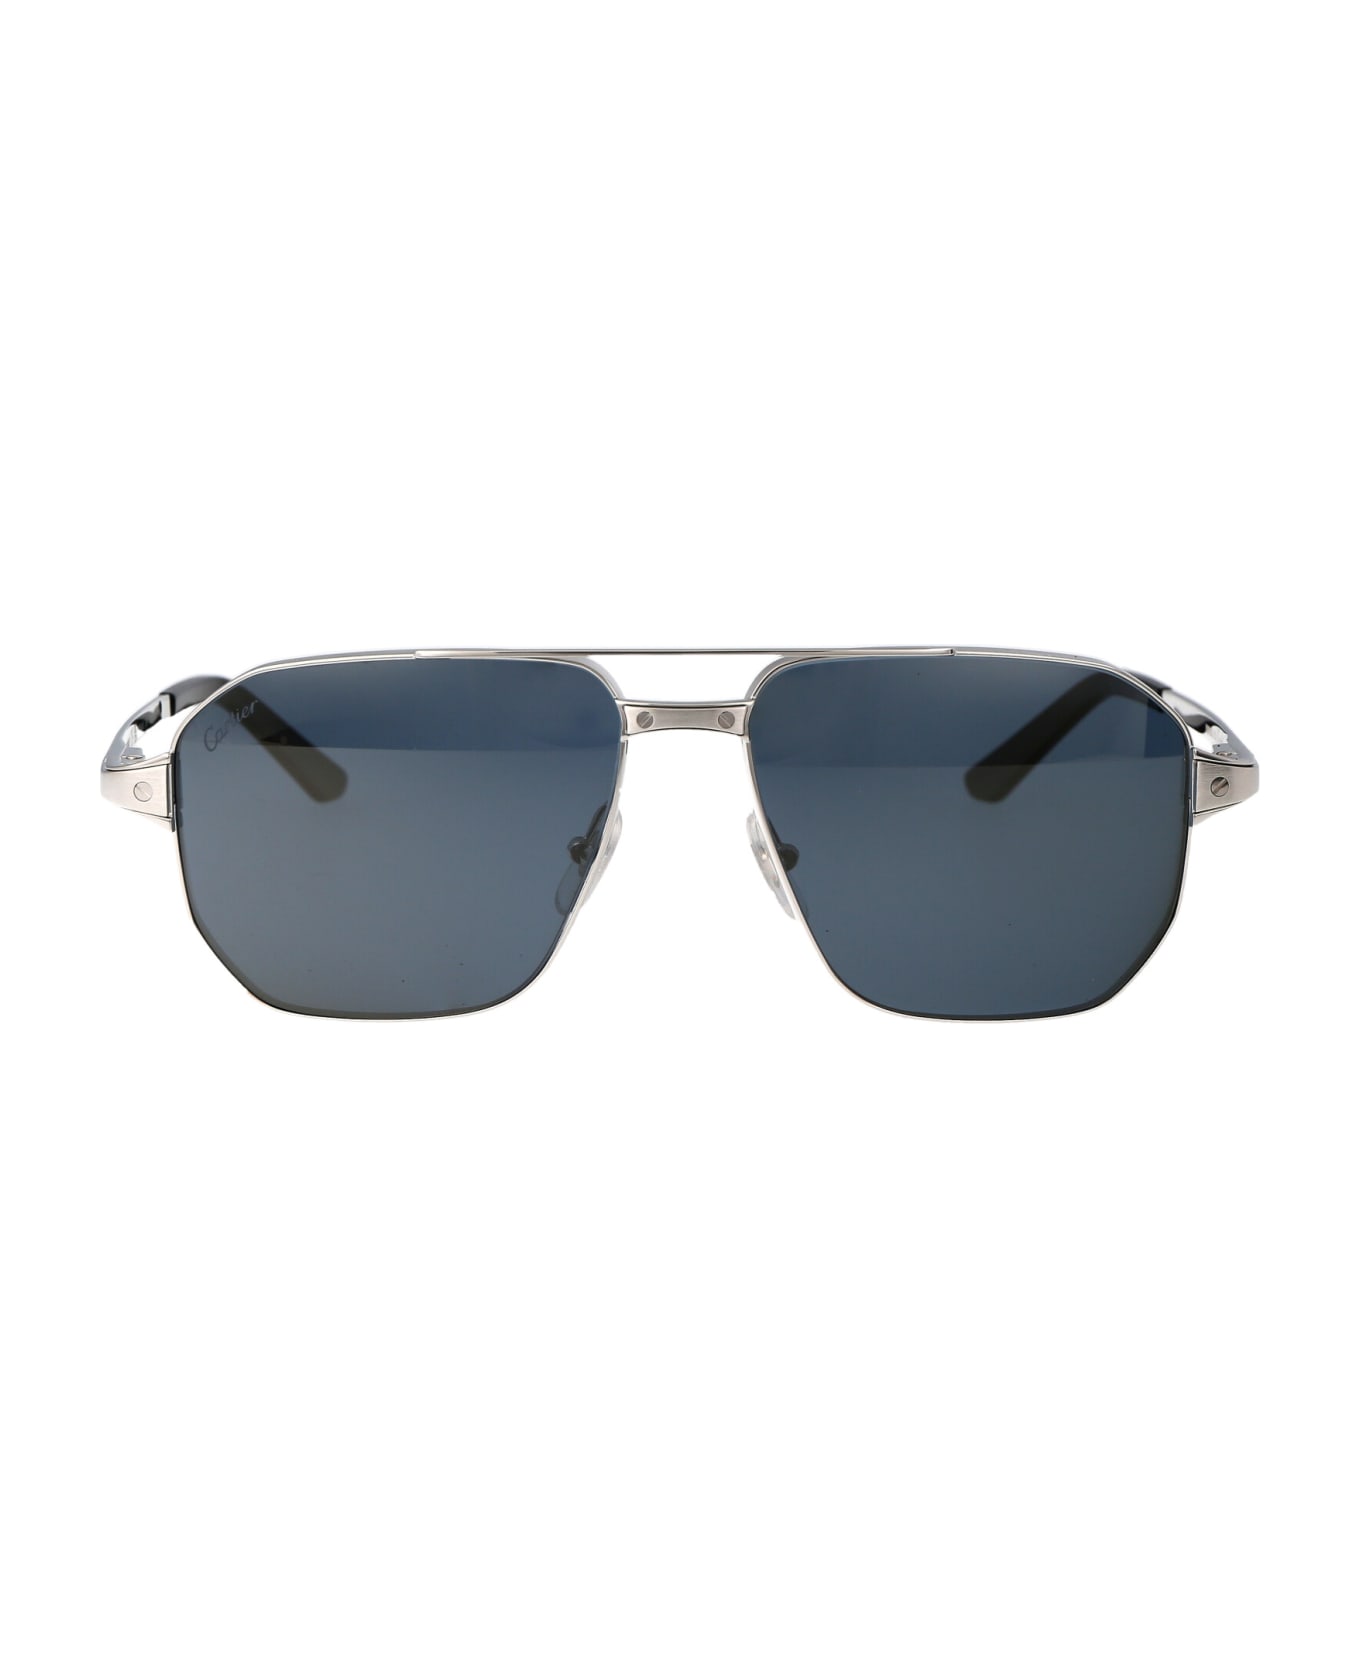 Cartier Eyewear Ct0424s Sunglasses - 004 SILVER SILVER BLUE